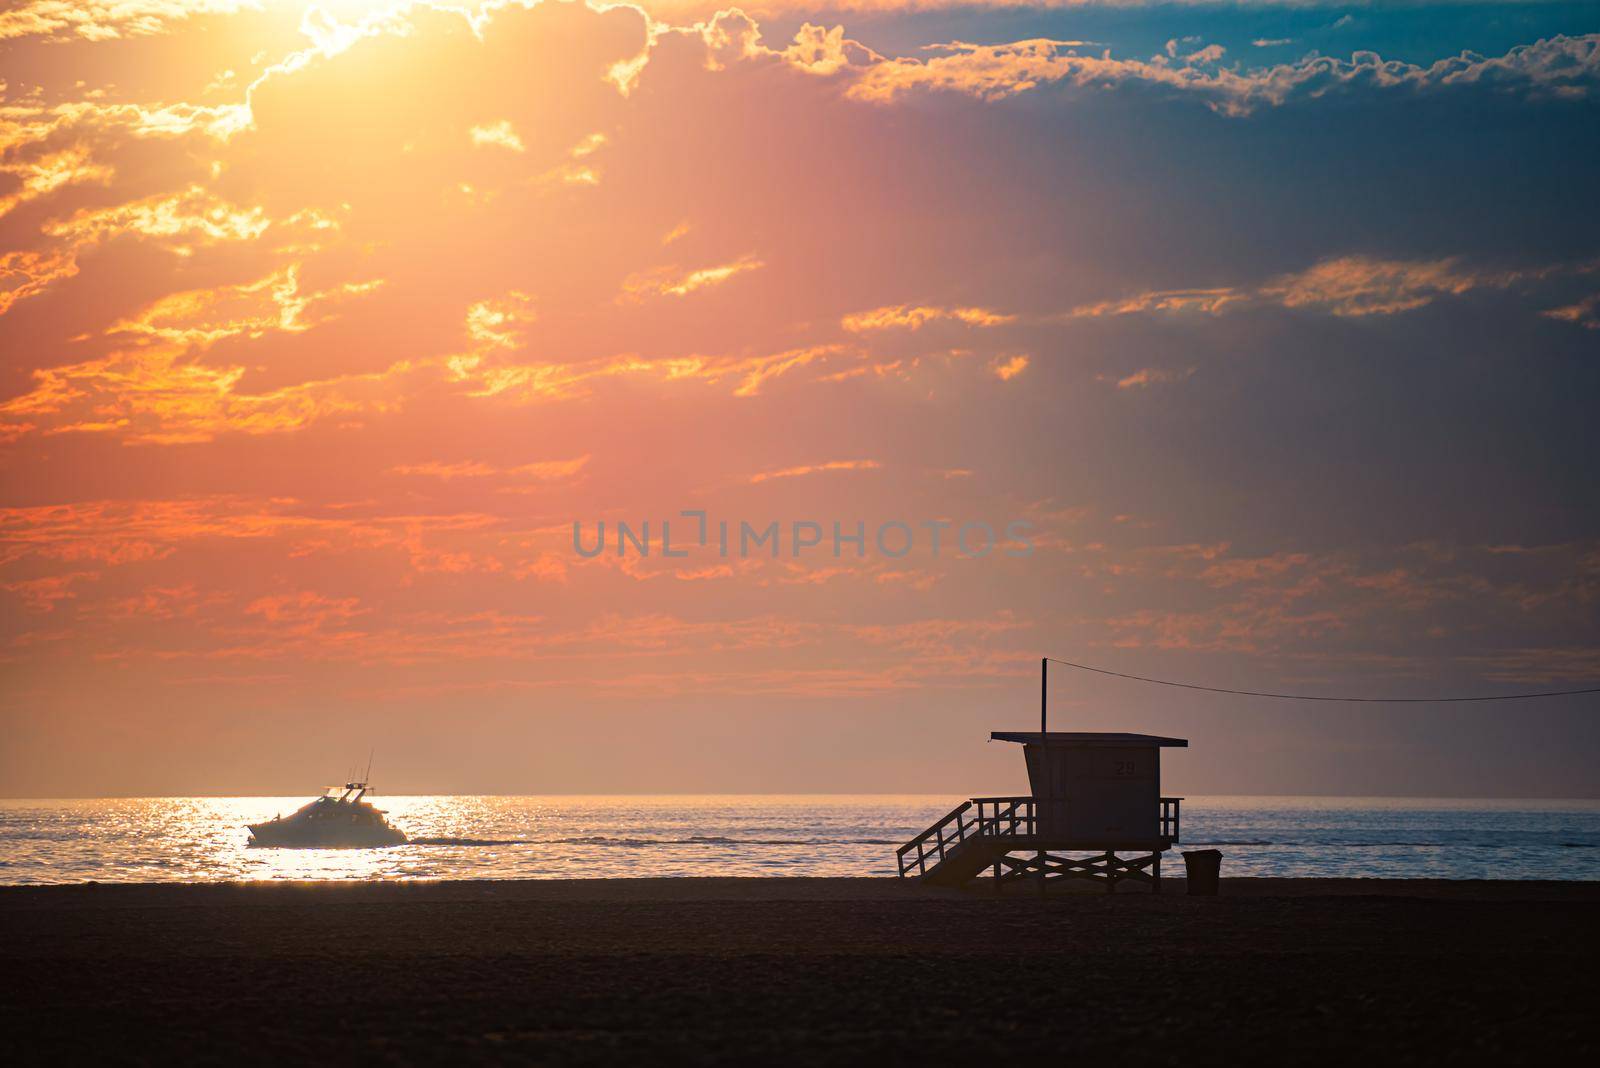 Lifeguard crew watching ocean at sunset in Santa Monica, California, United States of America